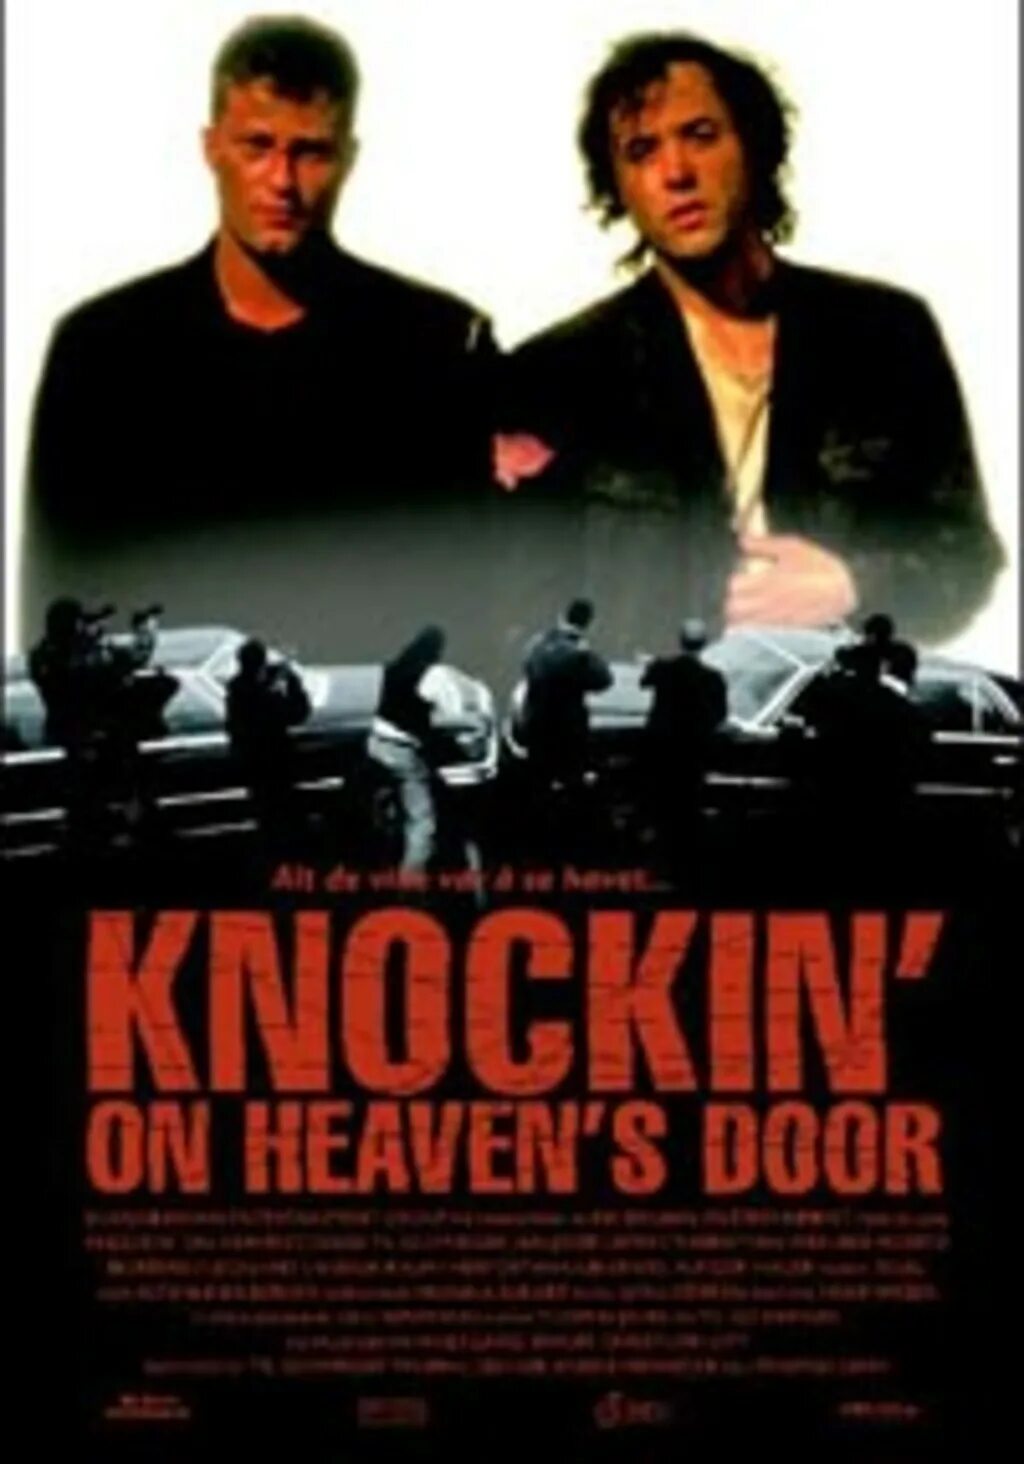 Knocking on heaven s door. Достучаться до небес Постер. Knocking on Heaven's Door poster. Картина Knockin on Heaven's Door.